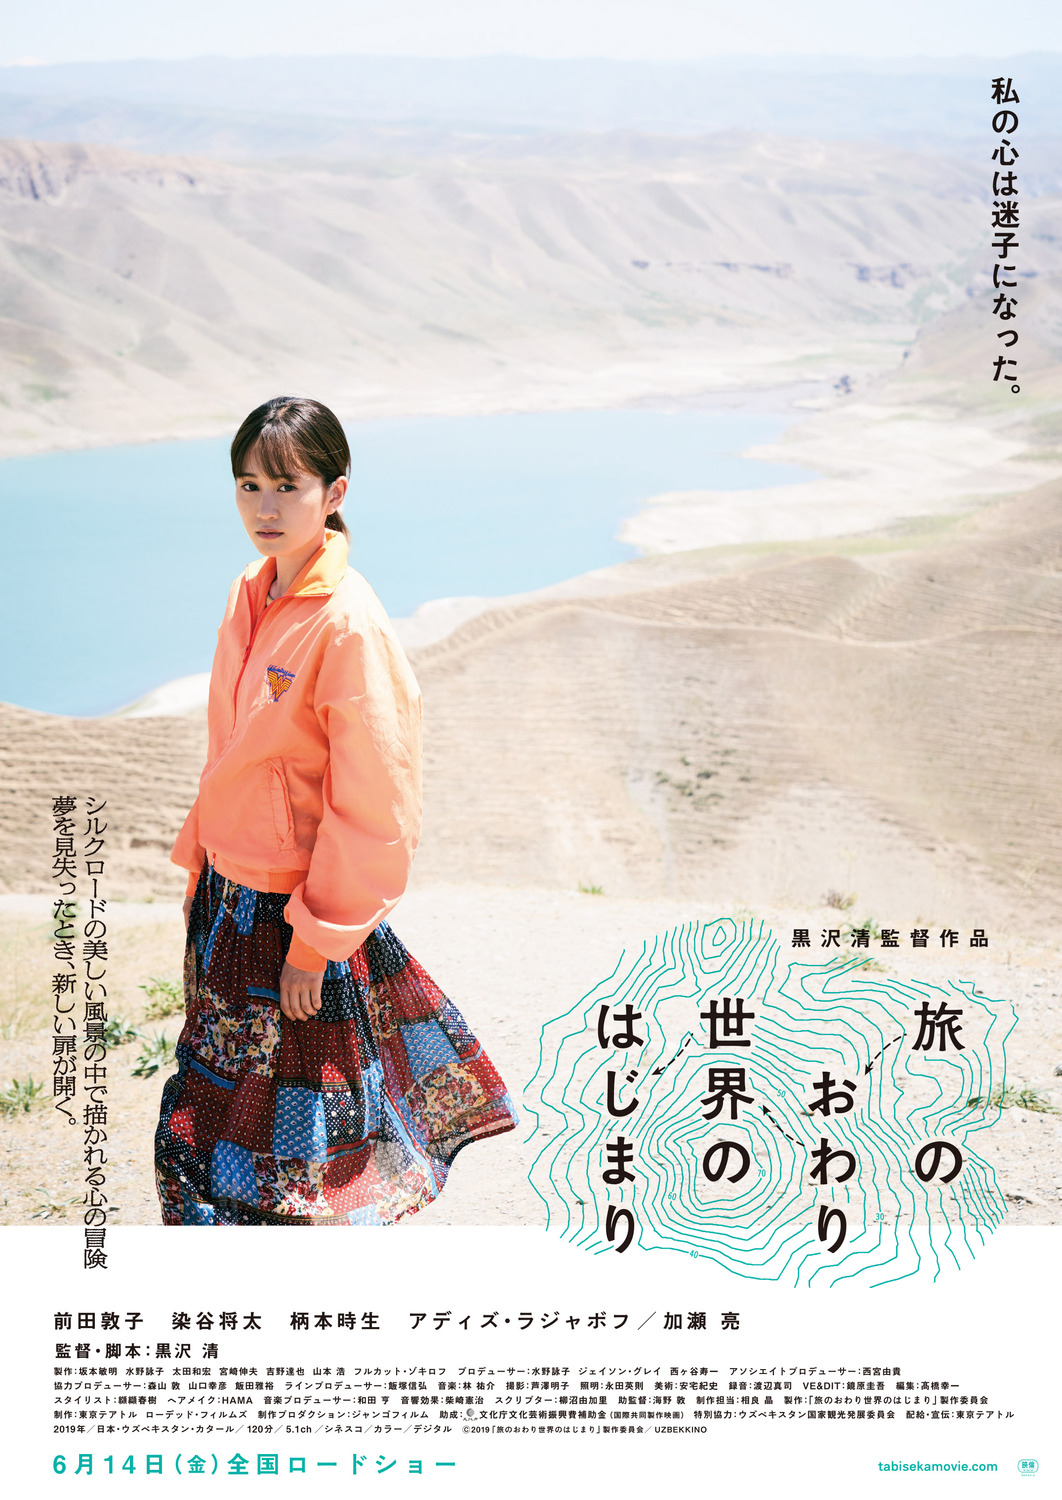 Extra Large Movie Poster Image for Tabi no owari sekai no hajimari (#1 of 2)